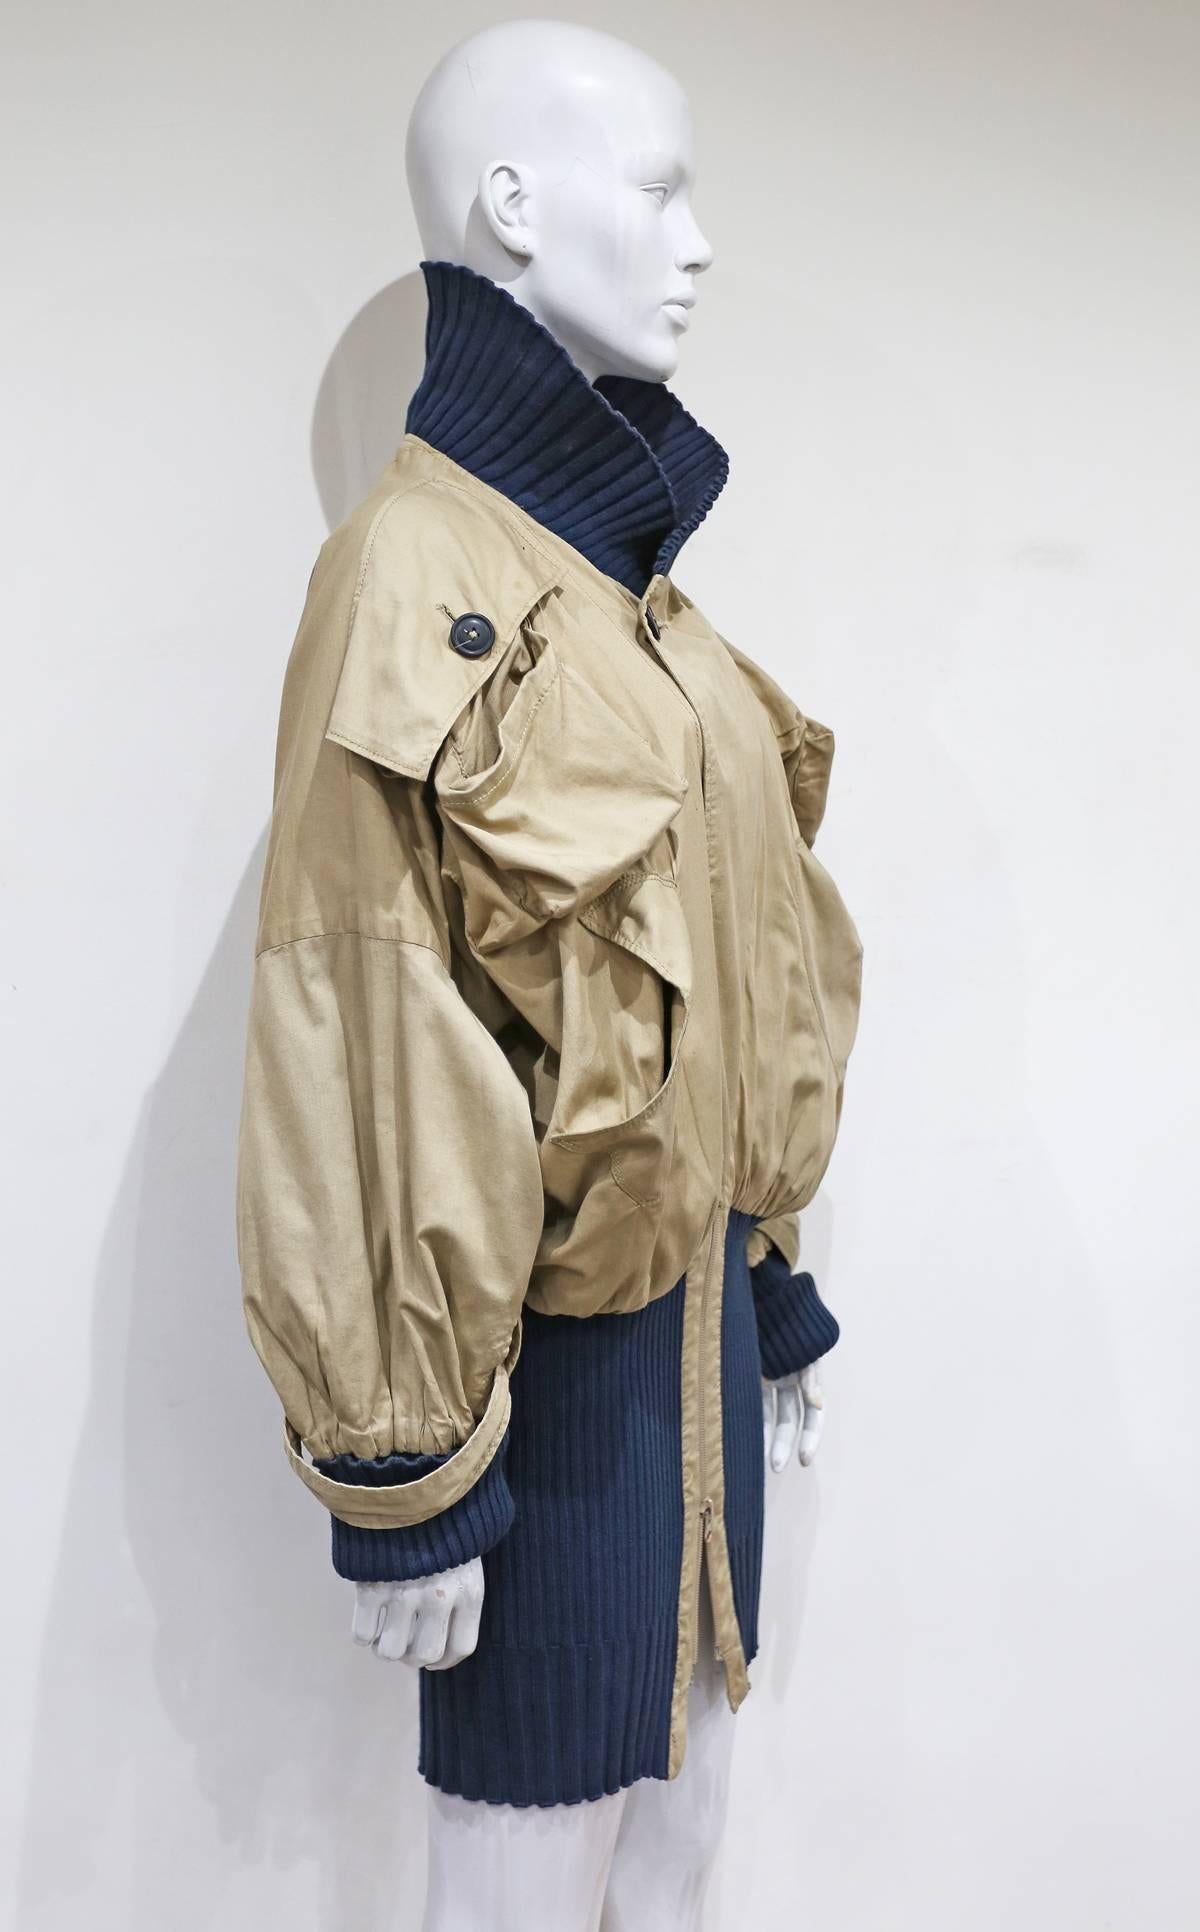 clint's bomber jacket